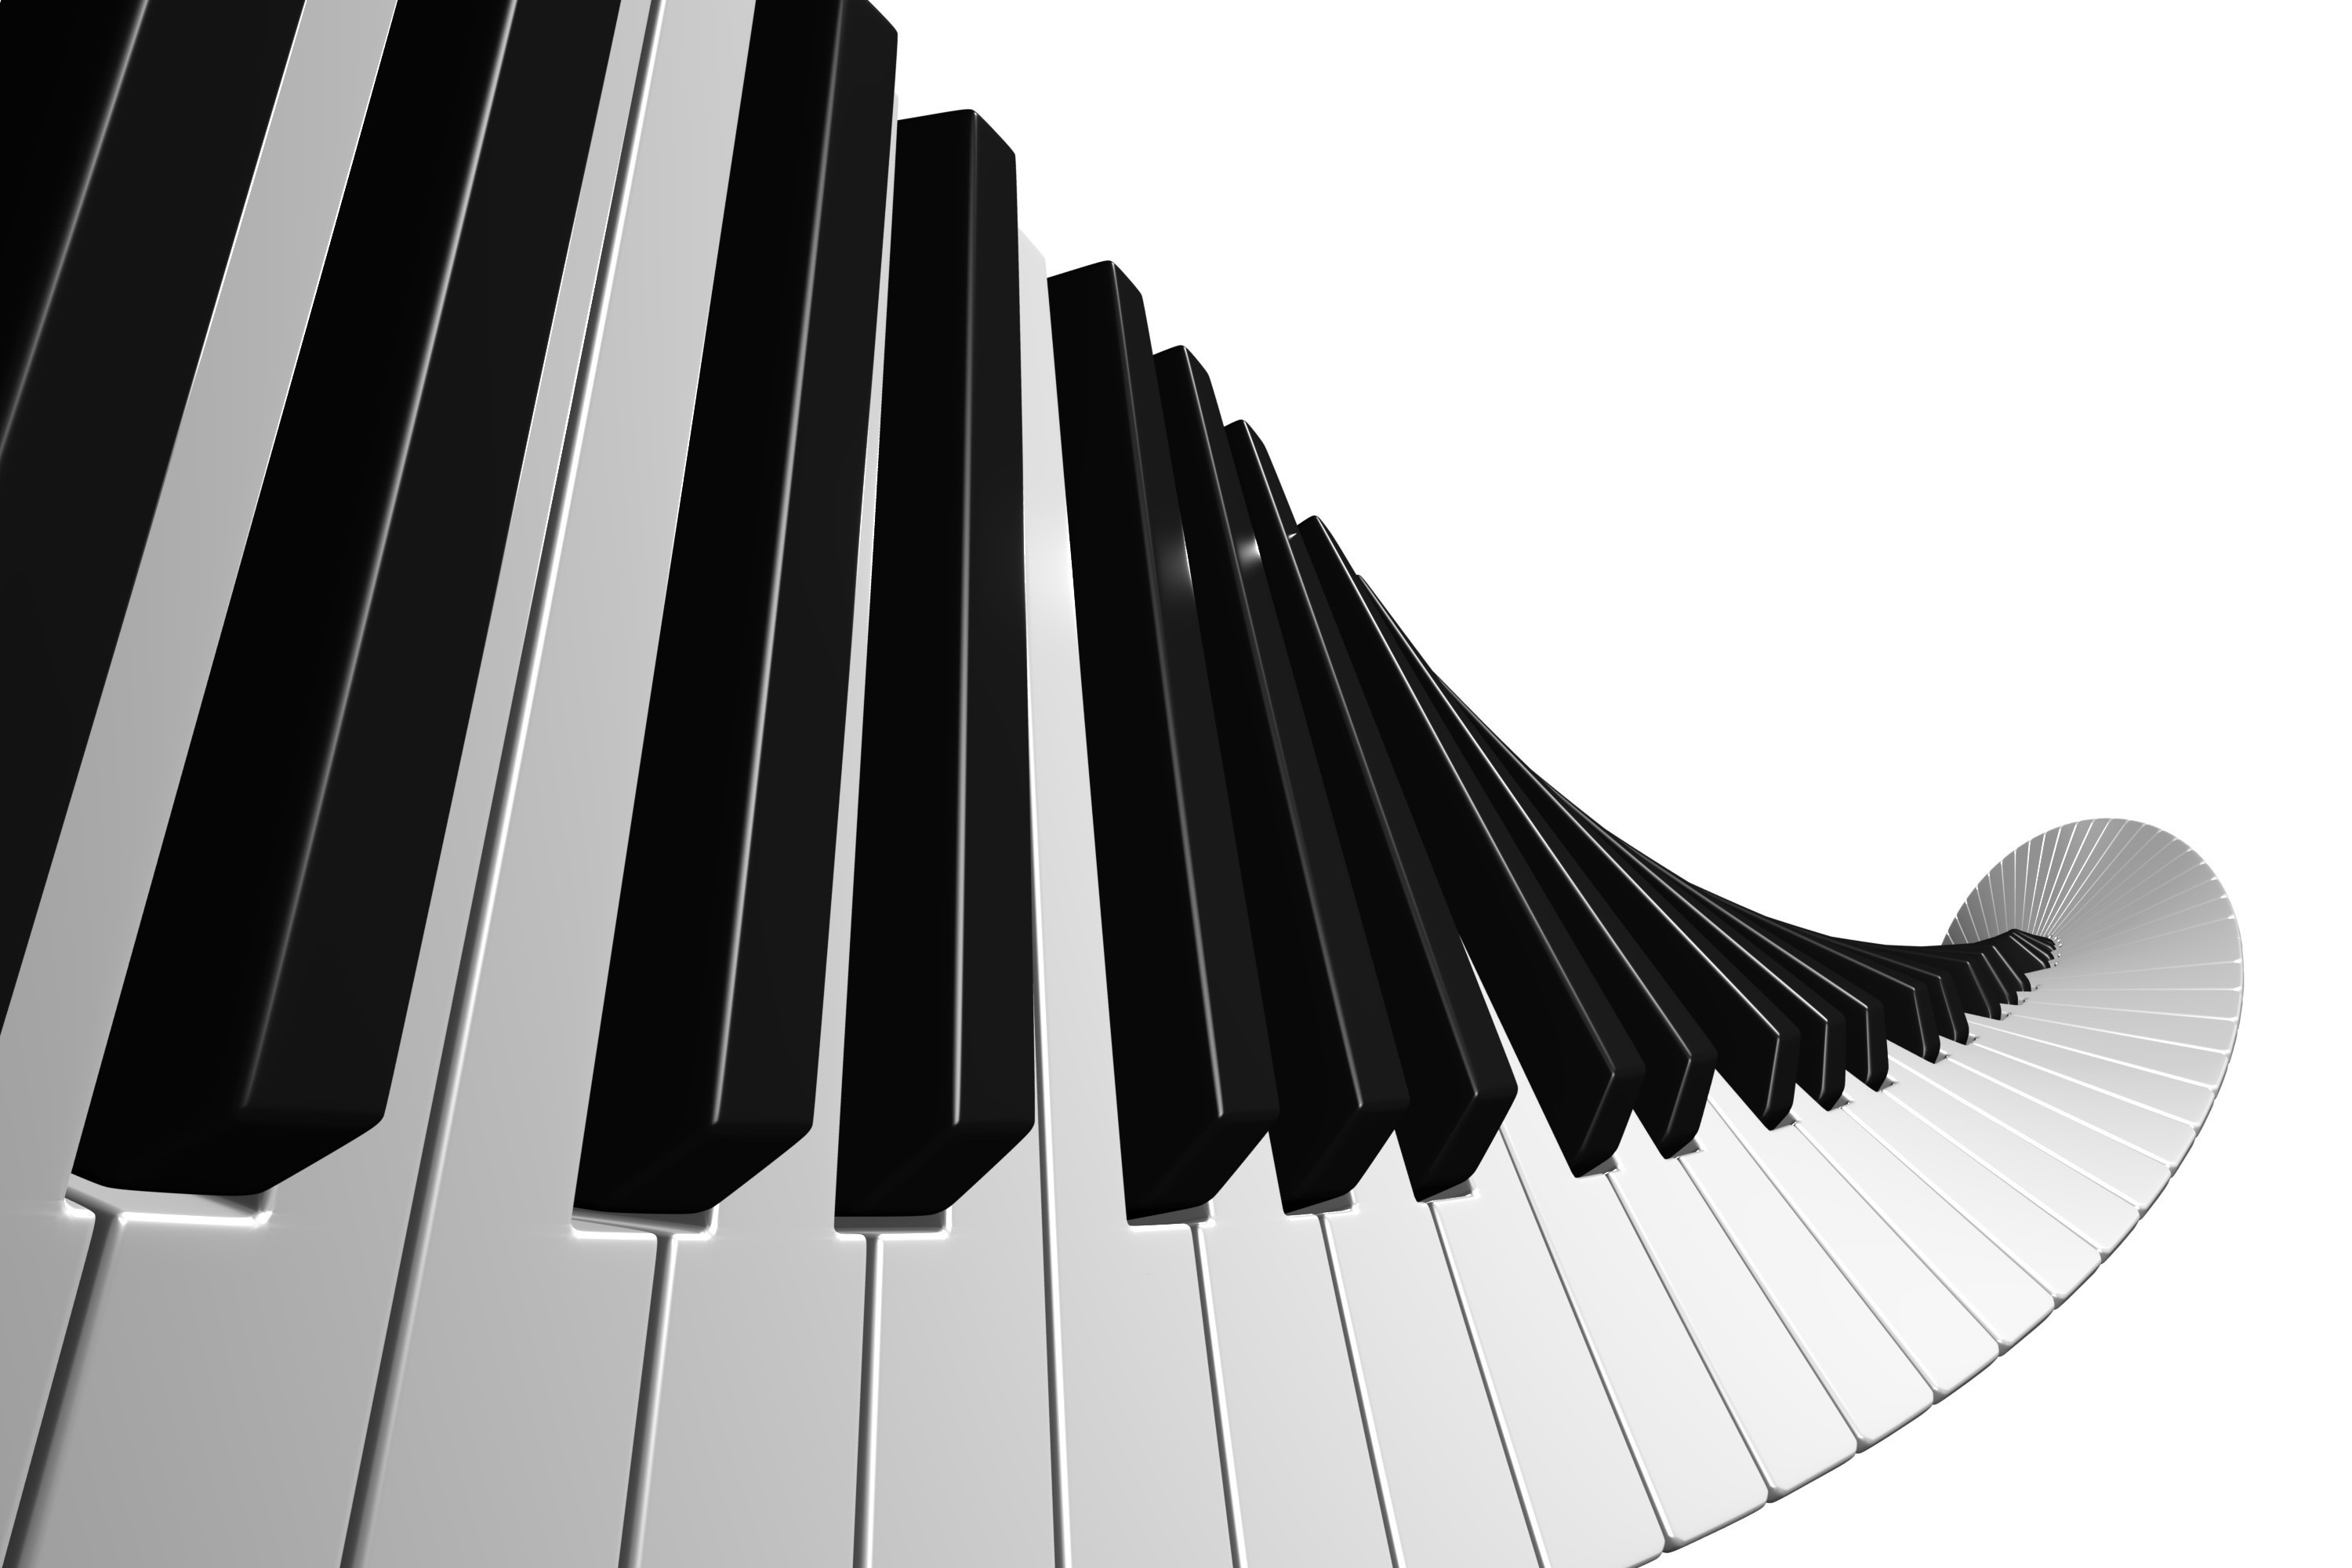 Piano Keys images & pictures - NearPics